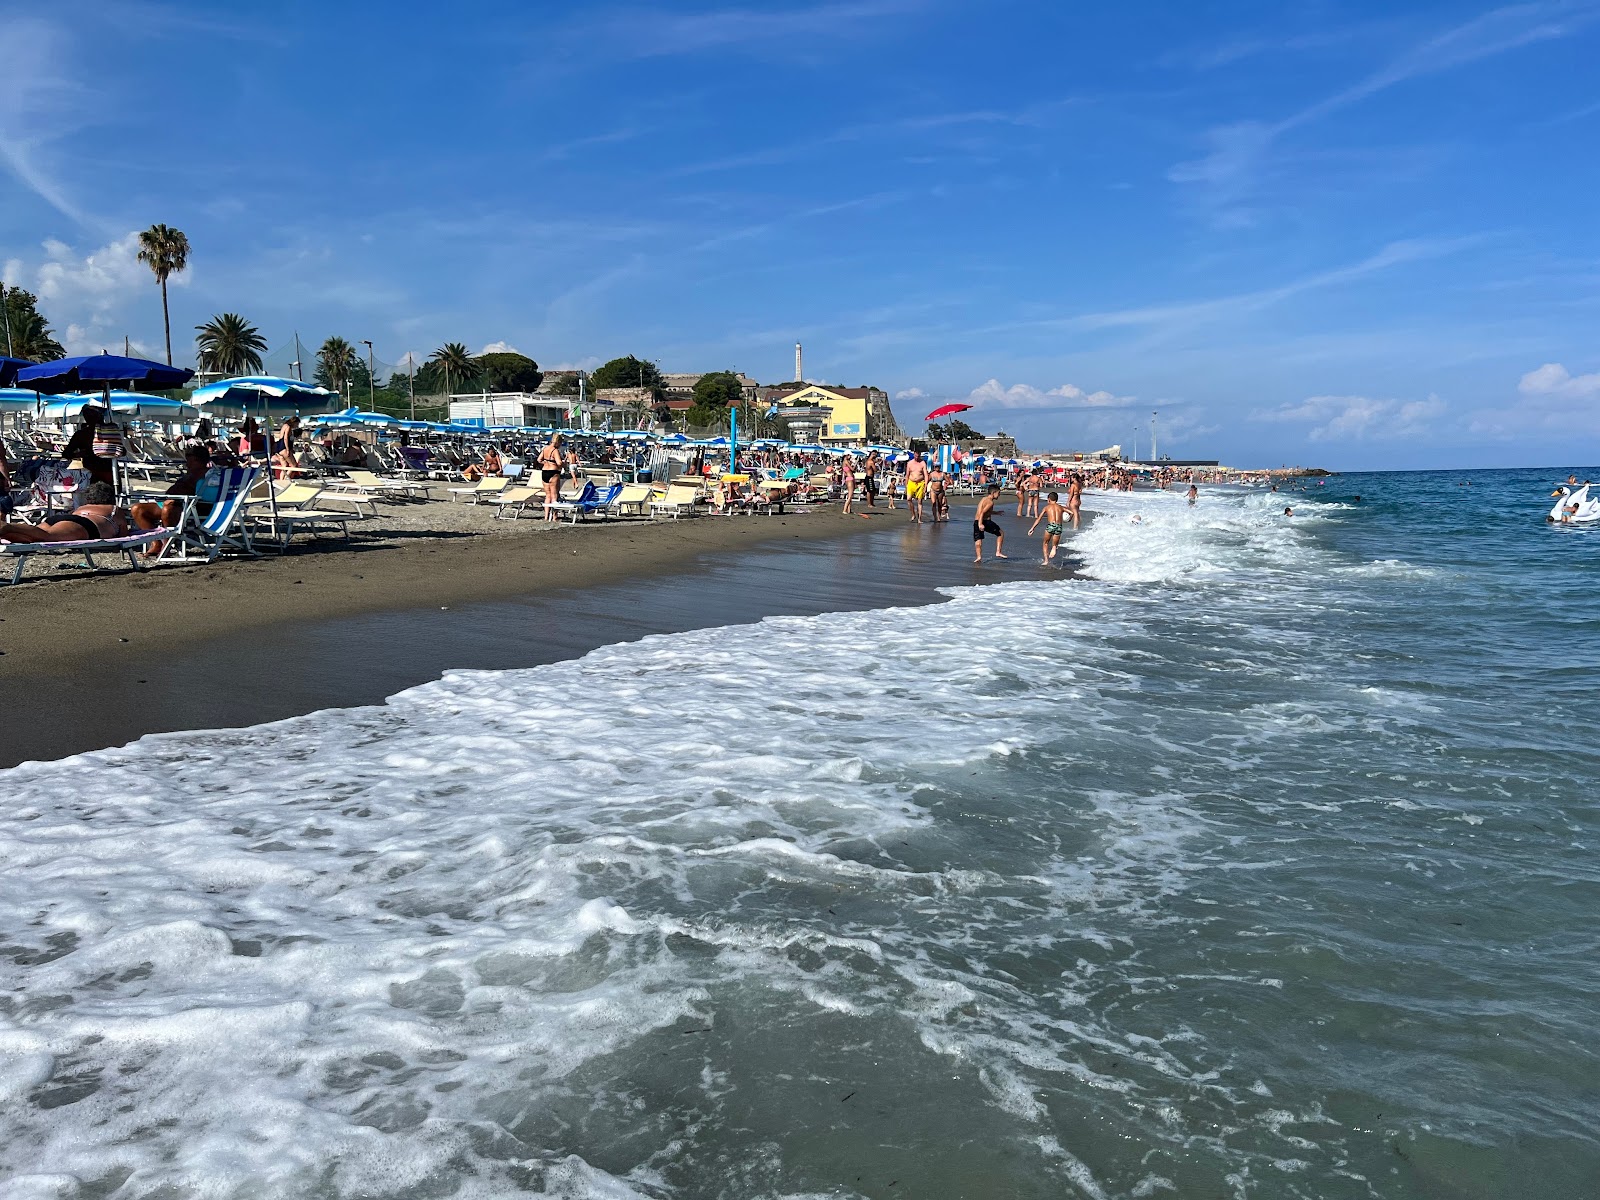 Spiaggia Libera del Prolungamento'in fotoğrafı geniş plaj ile birlikte